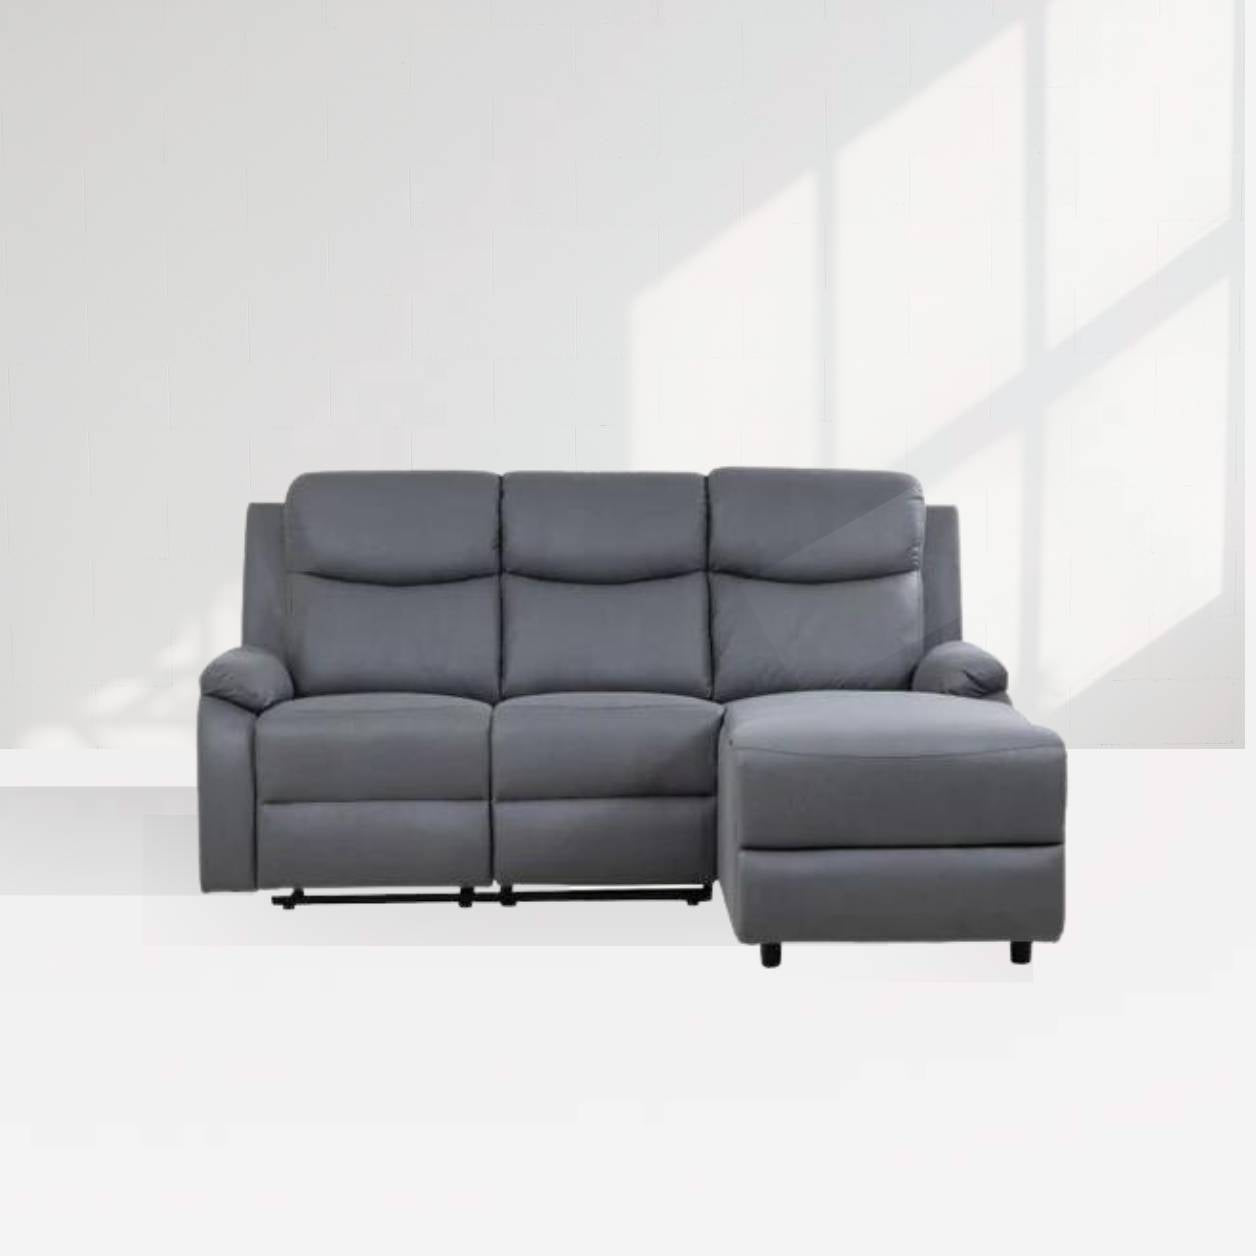 Crosby Corner Recliner Sofa - Right - Grey